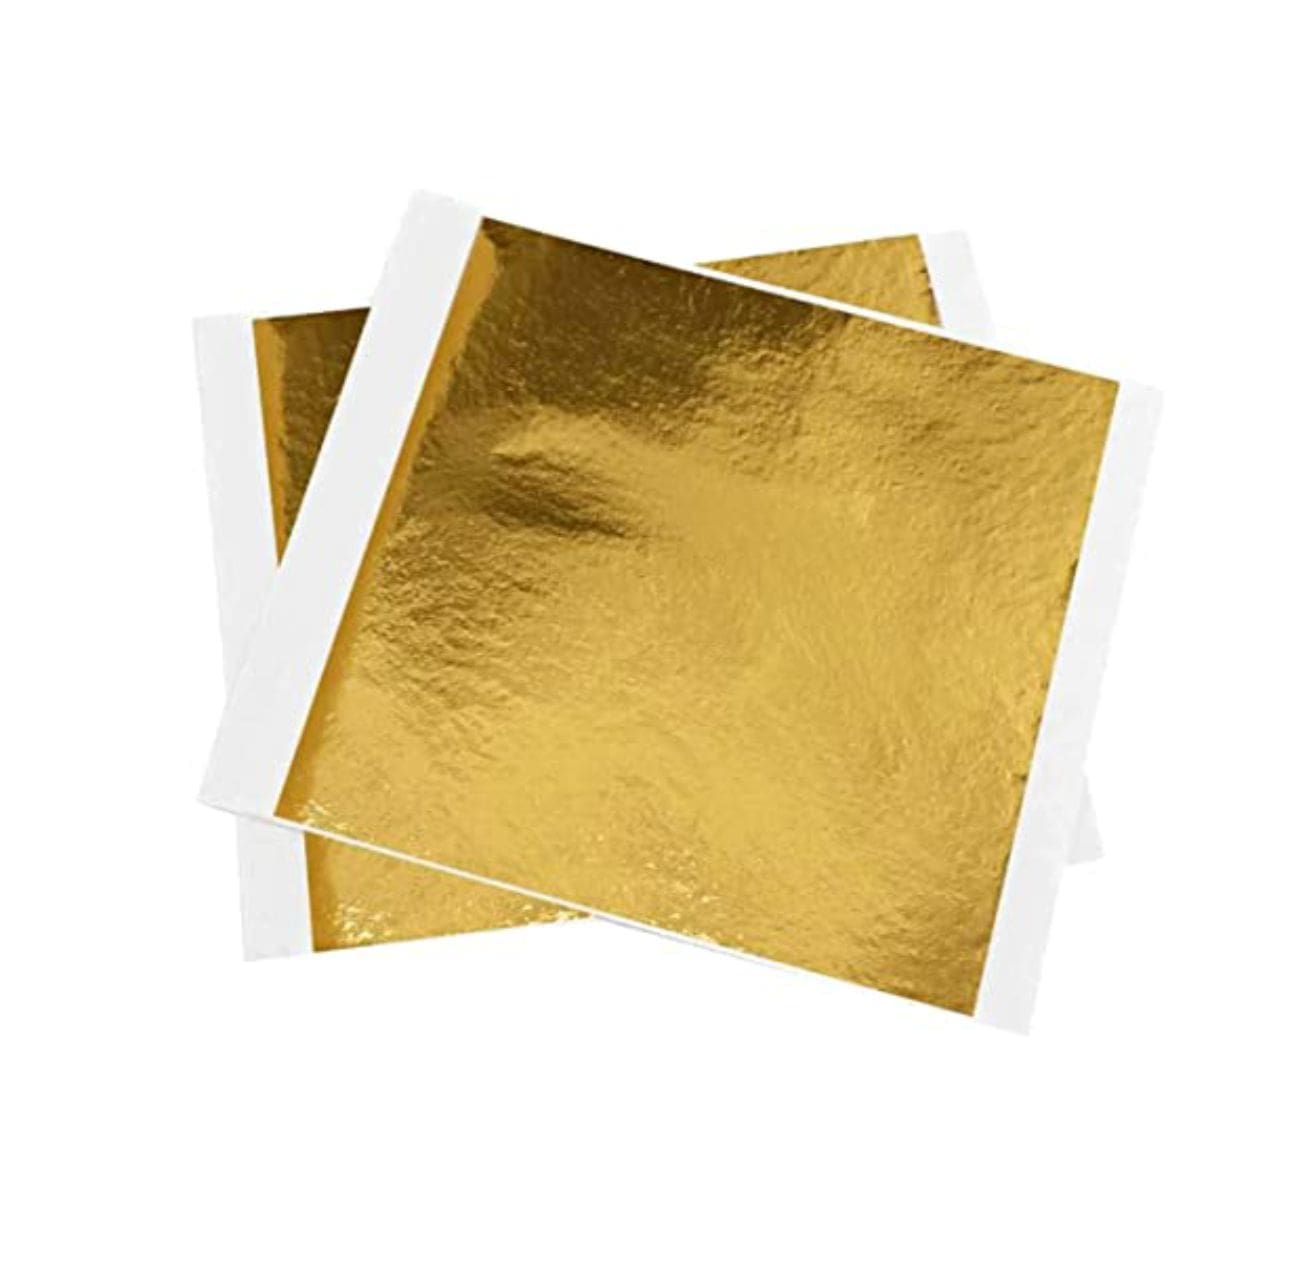 70ml Gold Leaf Adhesive Practical Gilding Glue Water Based